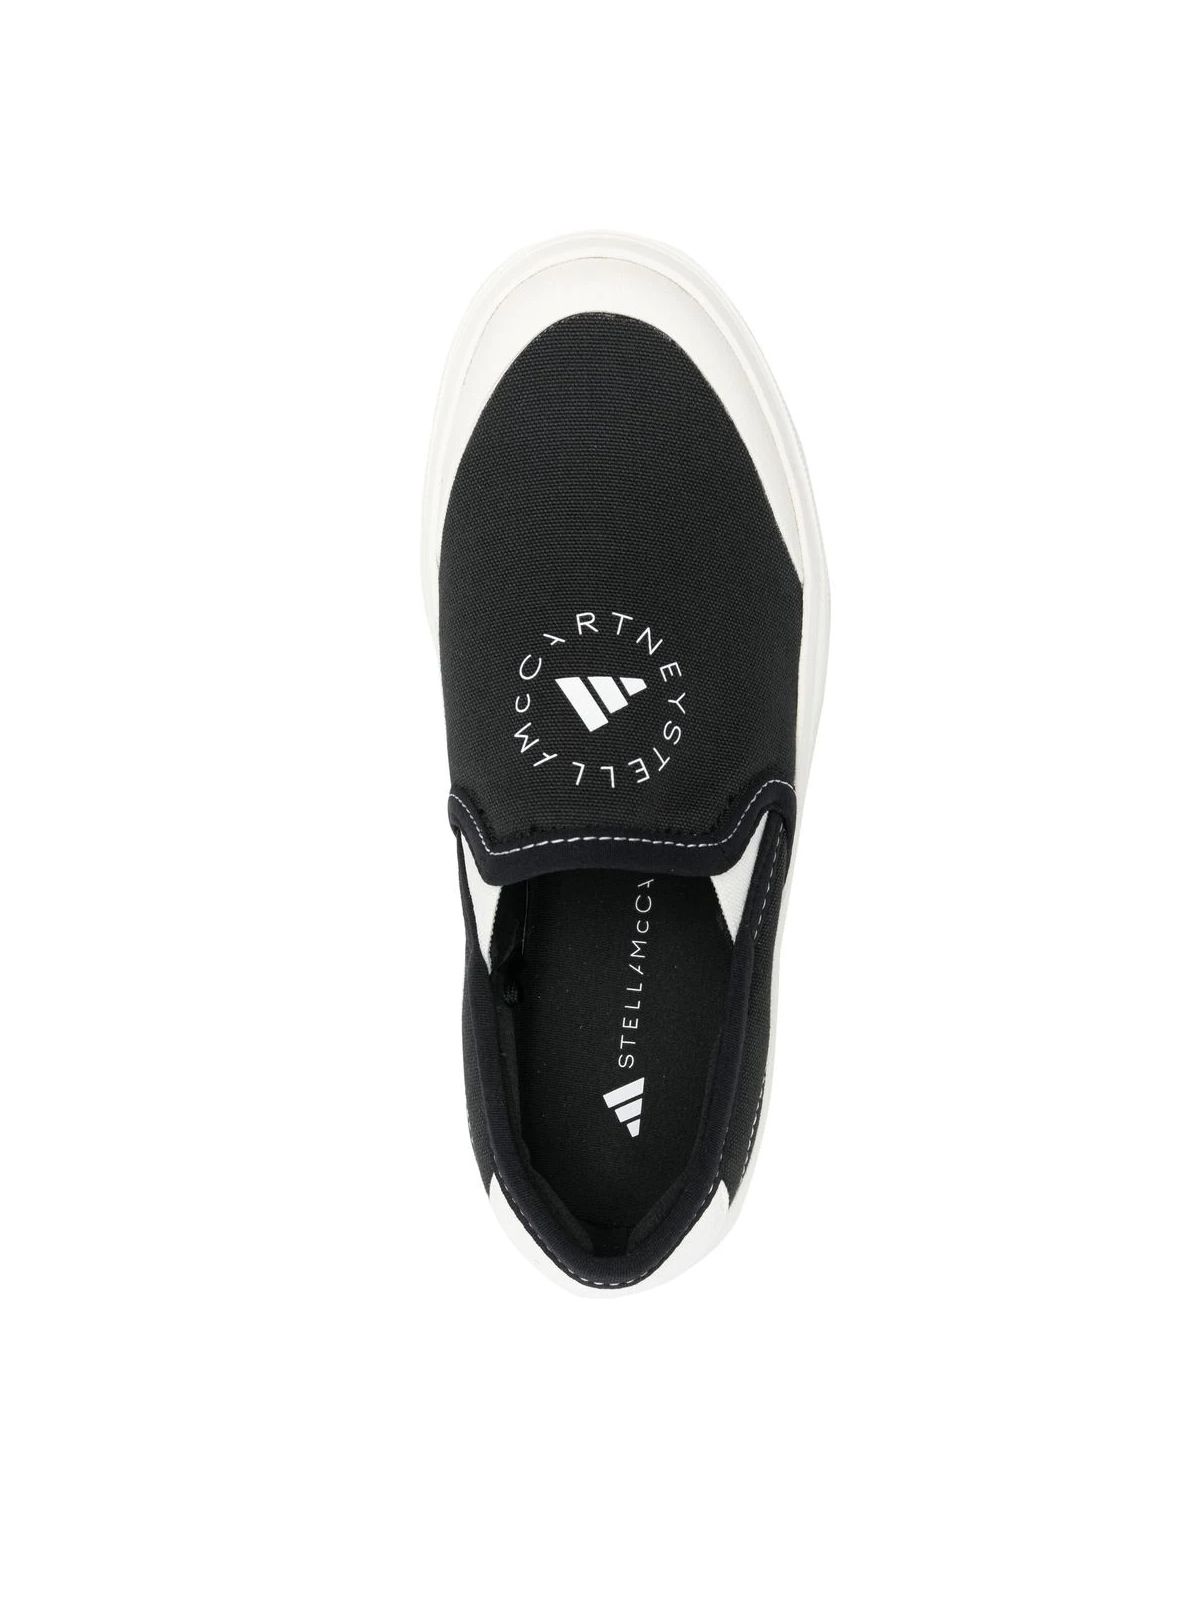 Shop Adidas By Stella Mccartney Women's Sandal Slip